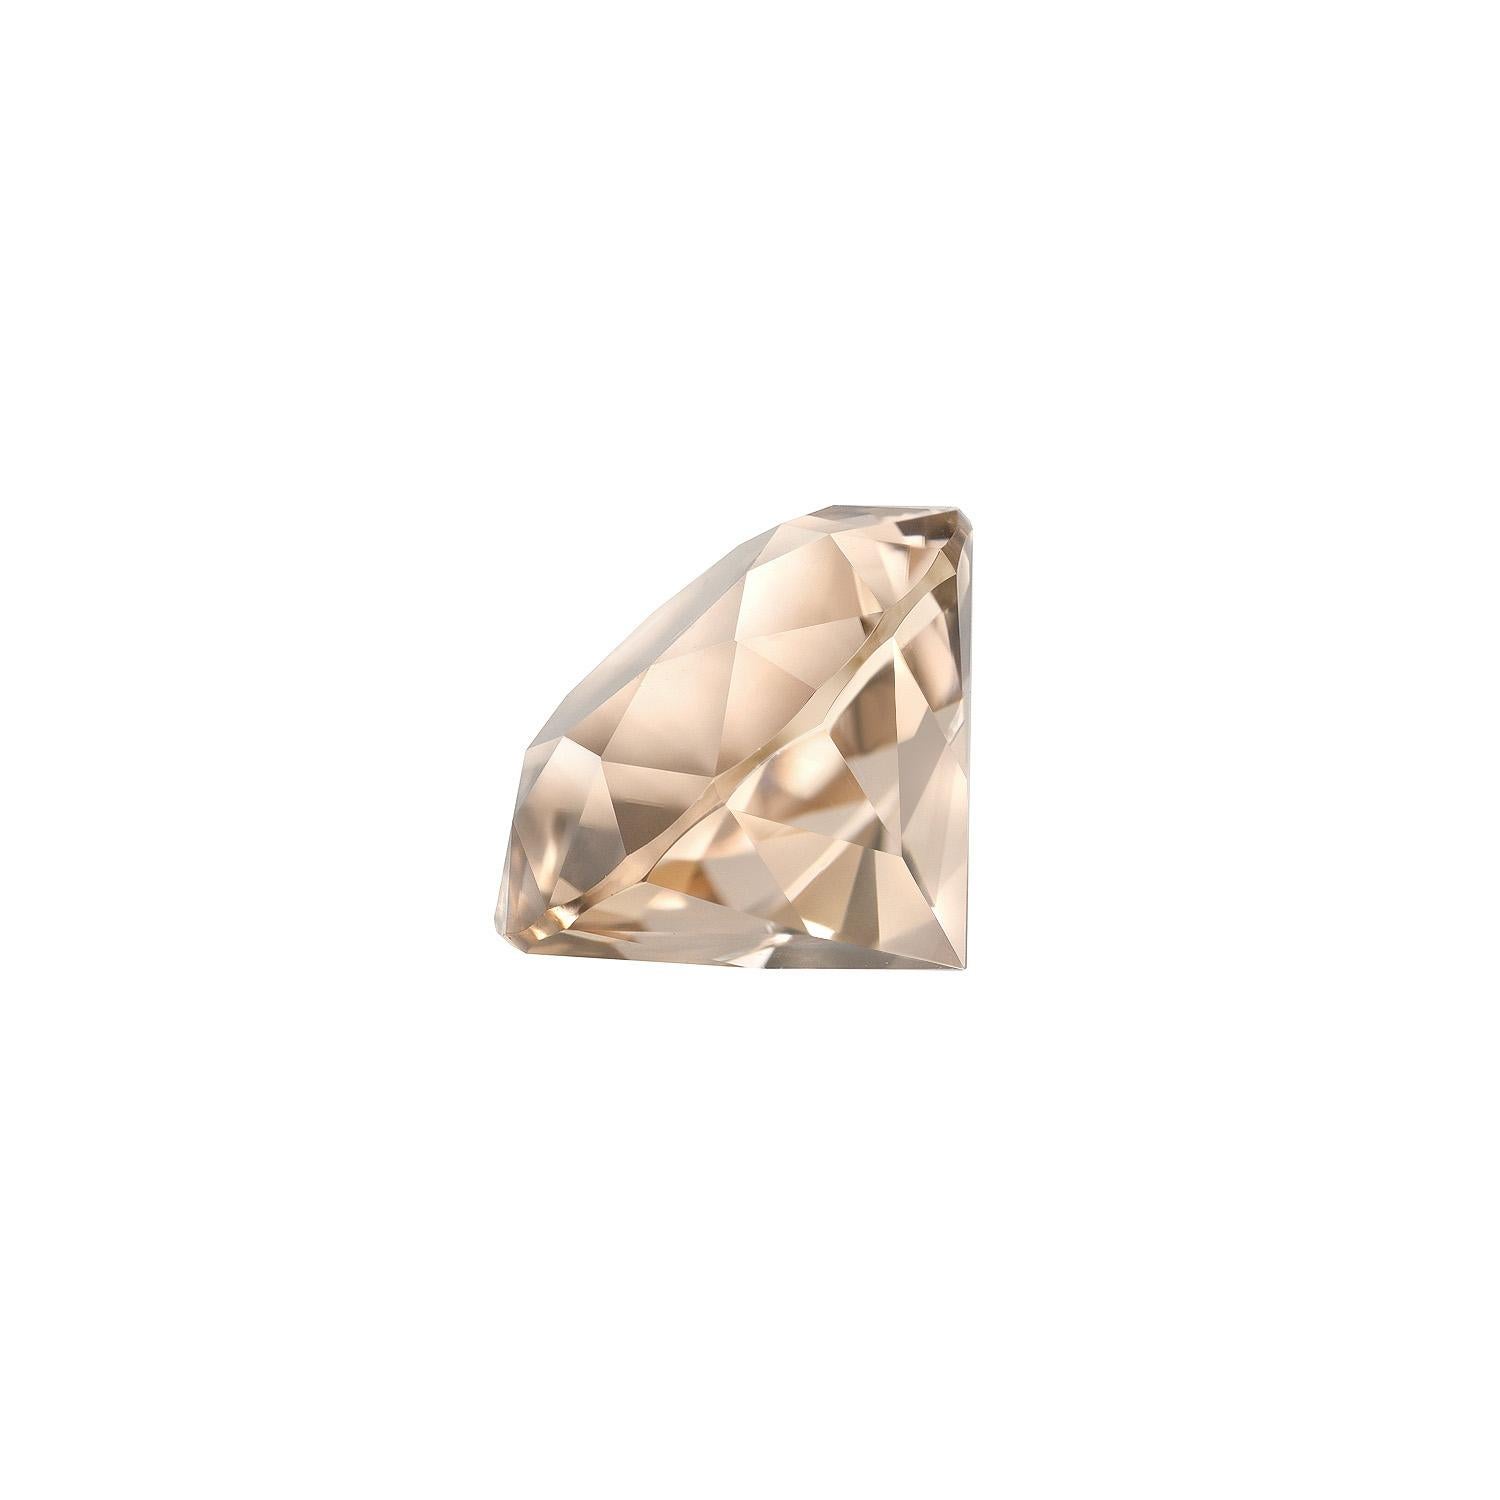 Round Cut Copper Tourmaline Ring Gem 3.15 Carat Round Unset Loose Gemstone